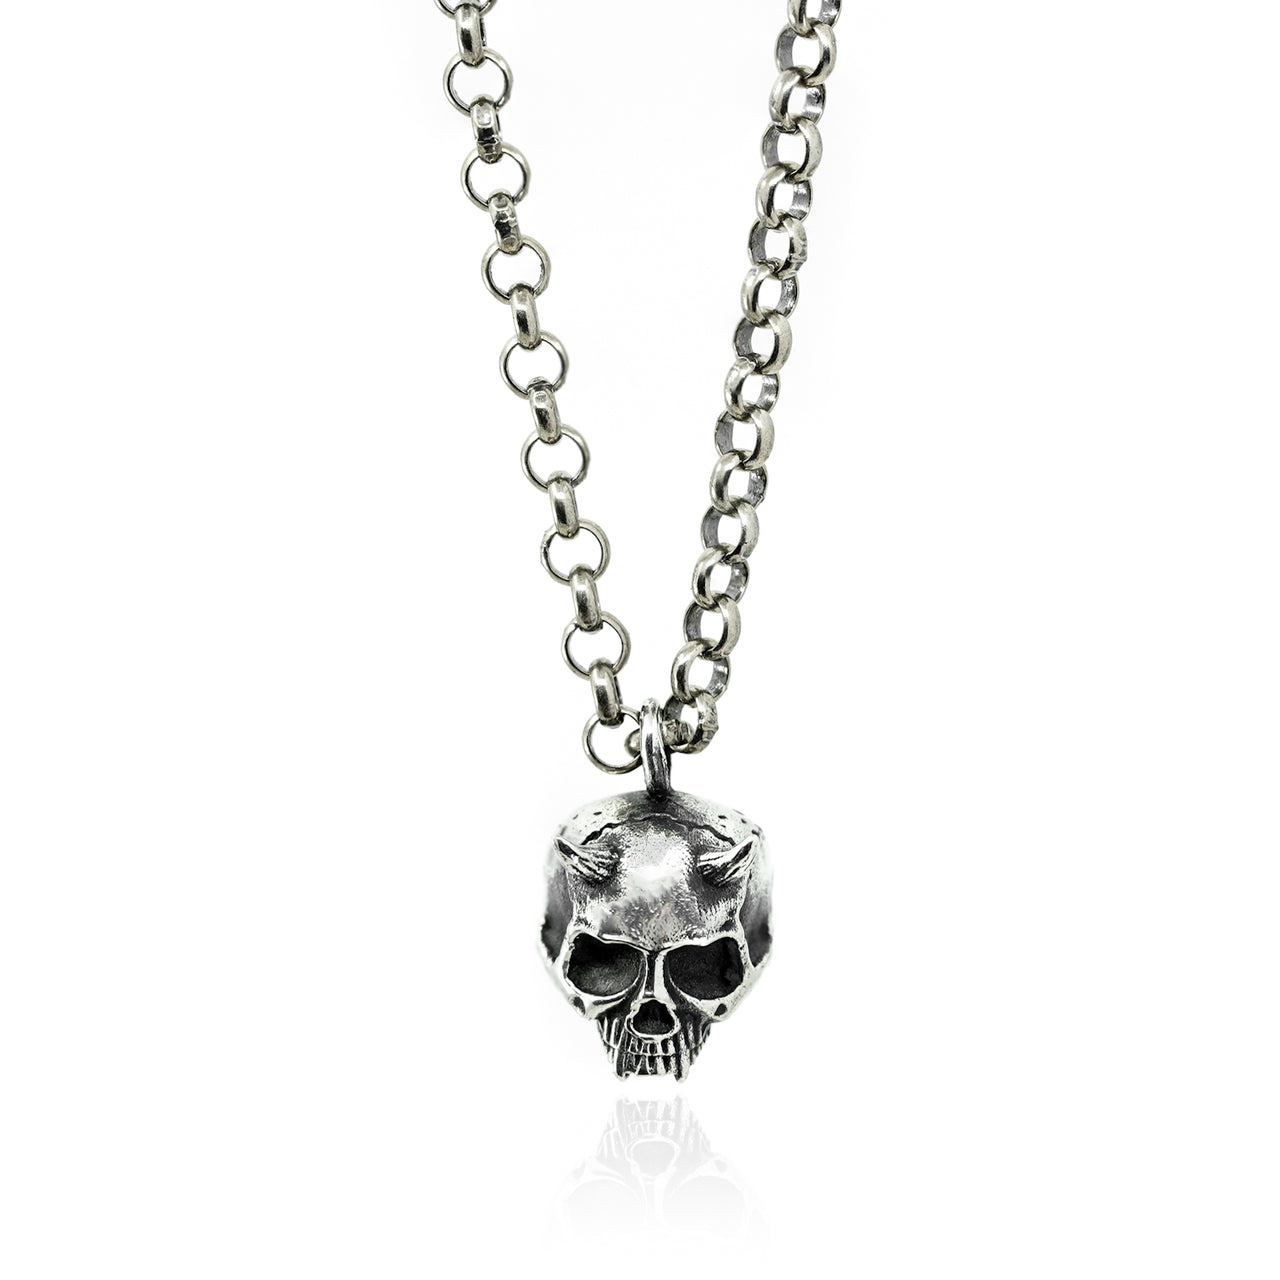 Diabolus Pendant - Front Facing on white background - gothic demon necklace